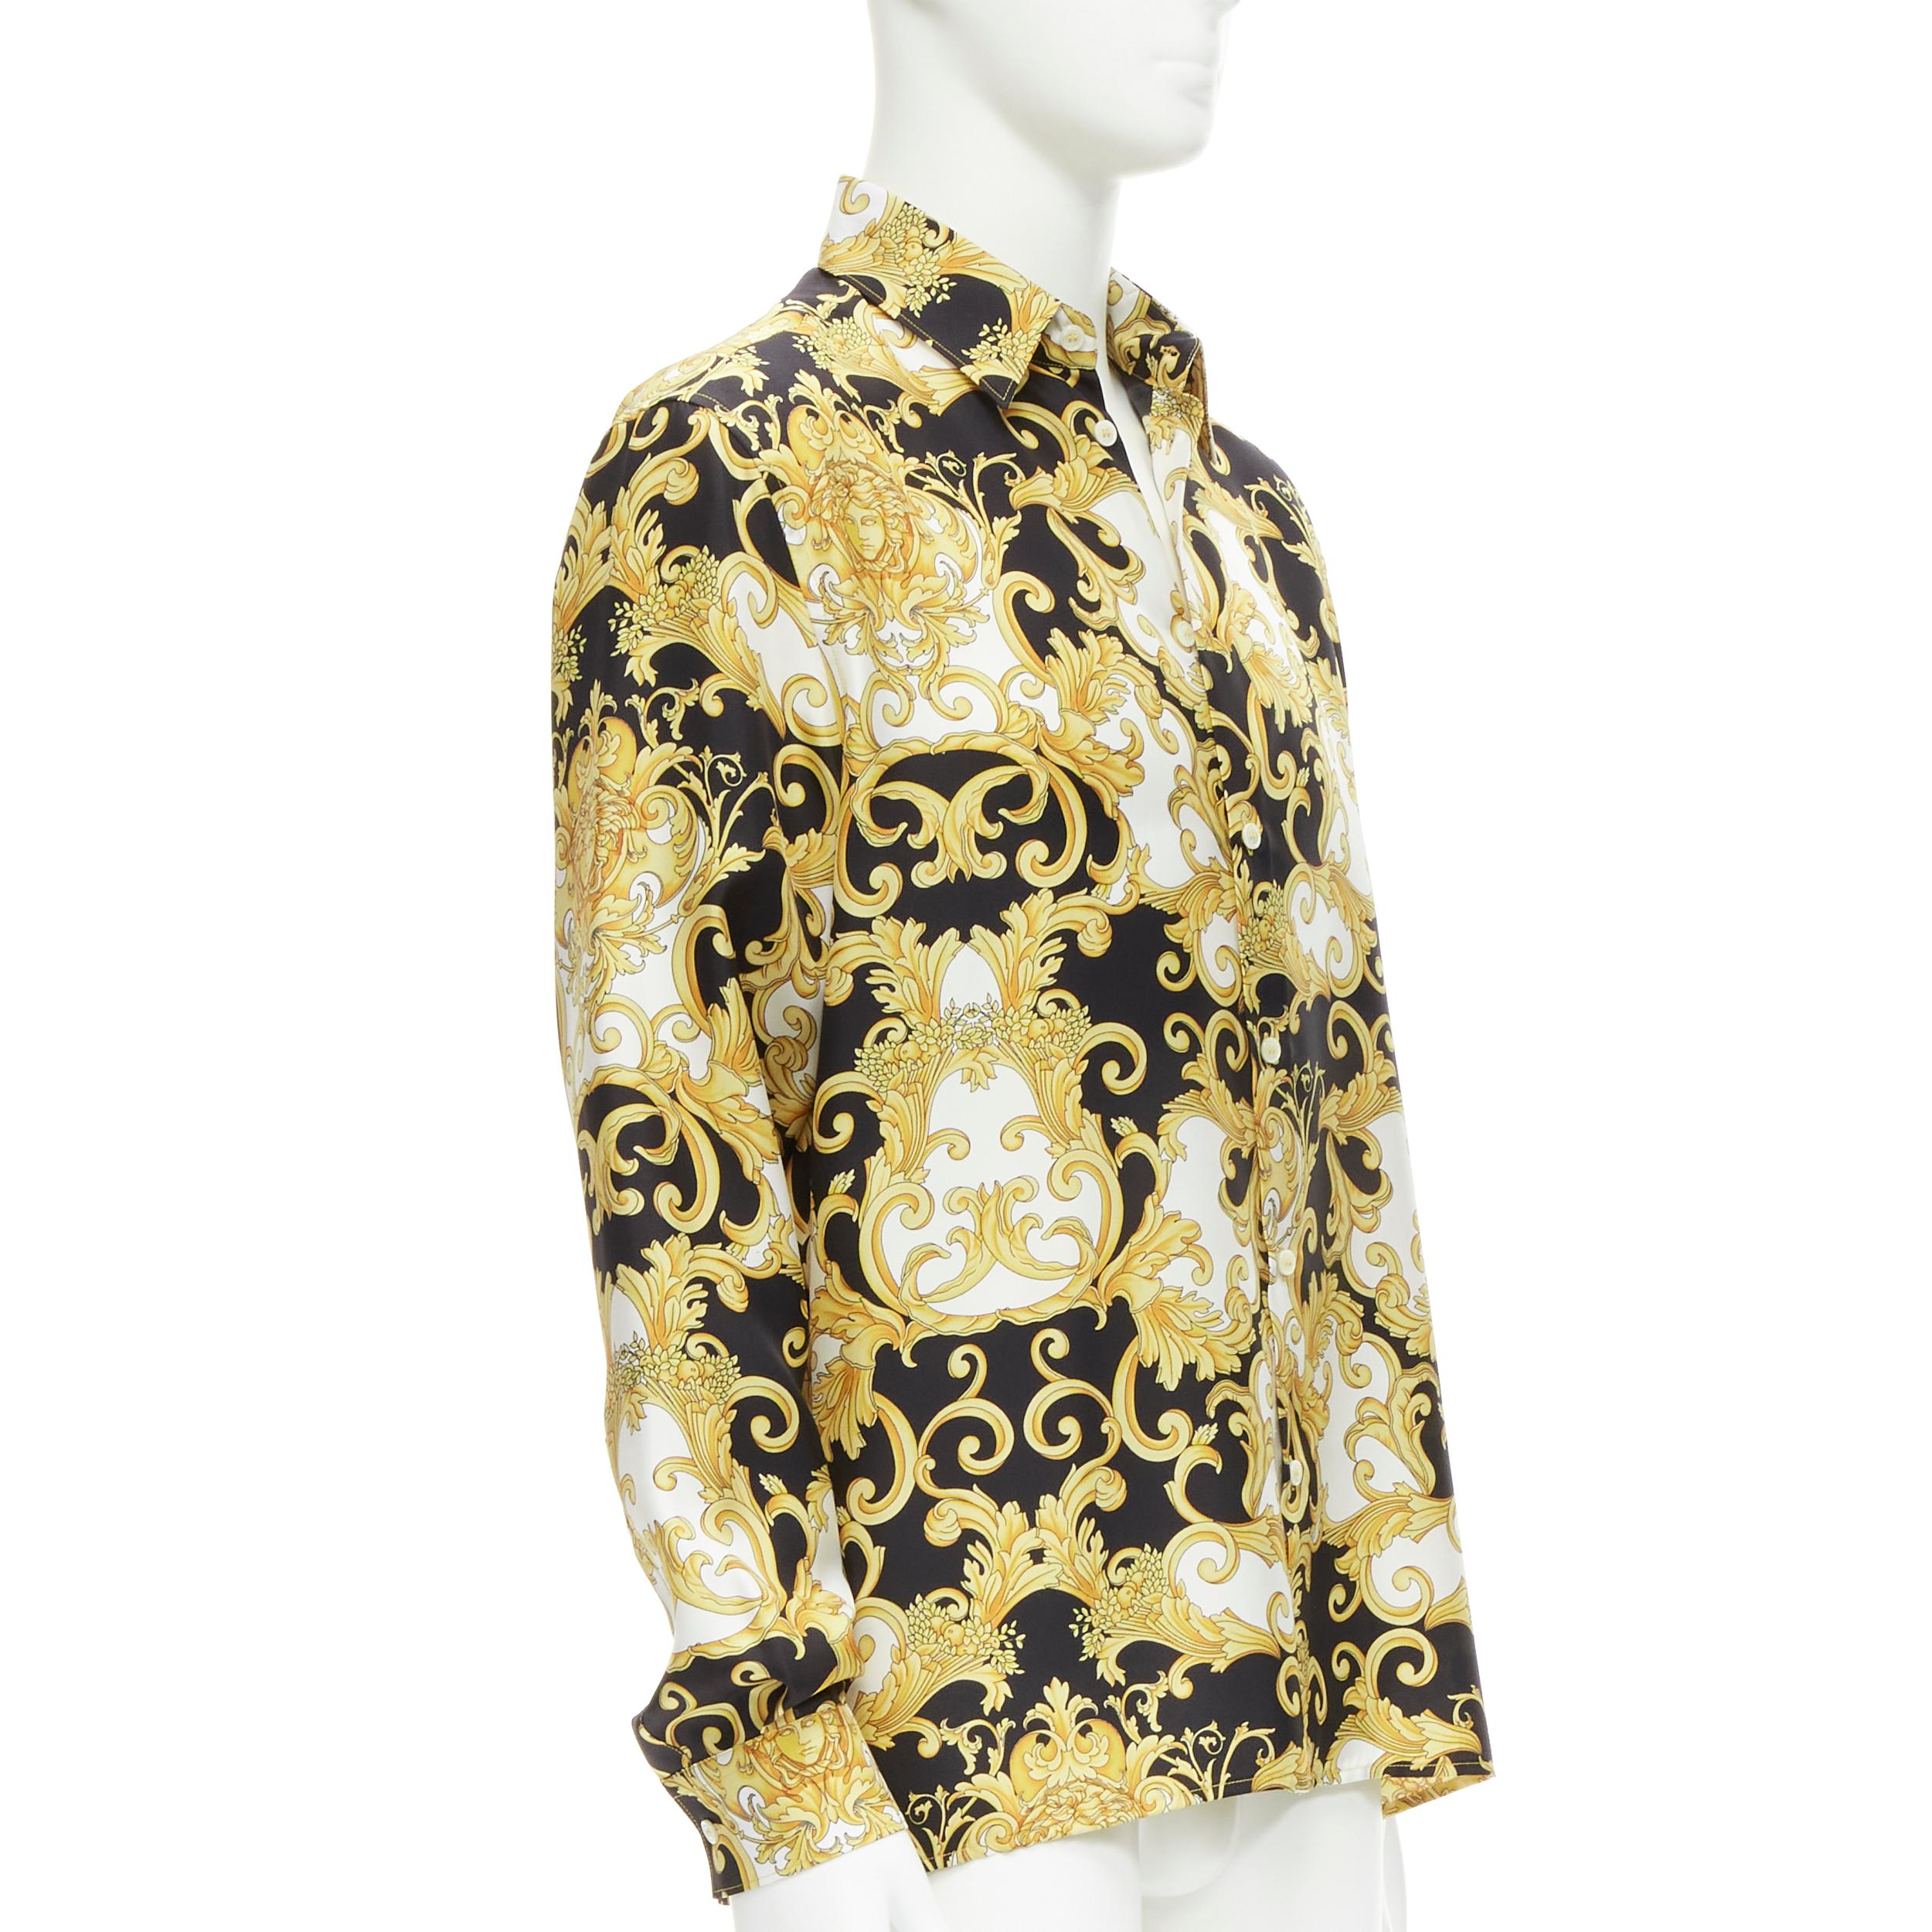 new VERSACE 2022 Renaissance Barocco 100% silk gold signature shirt IT50 L
Reference: TGAS/C01814
Brand: Versace
Designer: Donatella Versace
Model: 1005026 1A05911 5B070
Collection: 2022
Material: Silk
Color: Multicolour
Pattern: Floral
Closure: